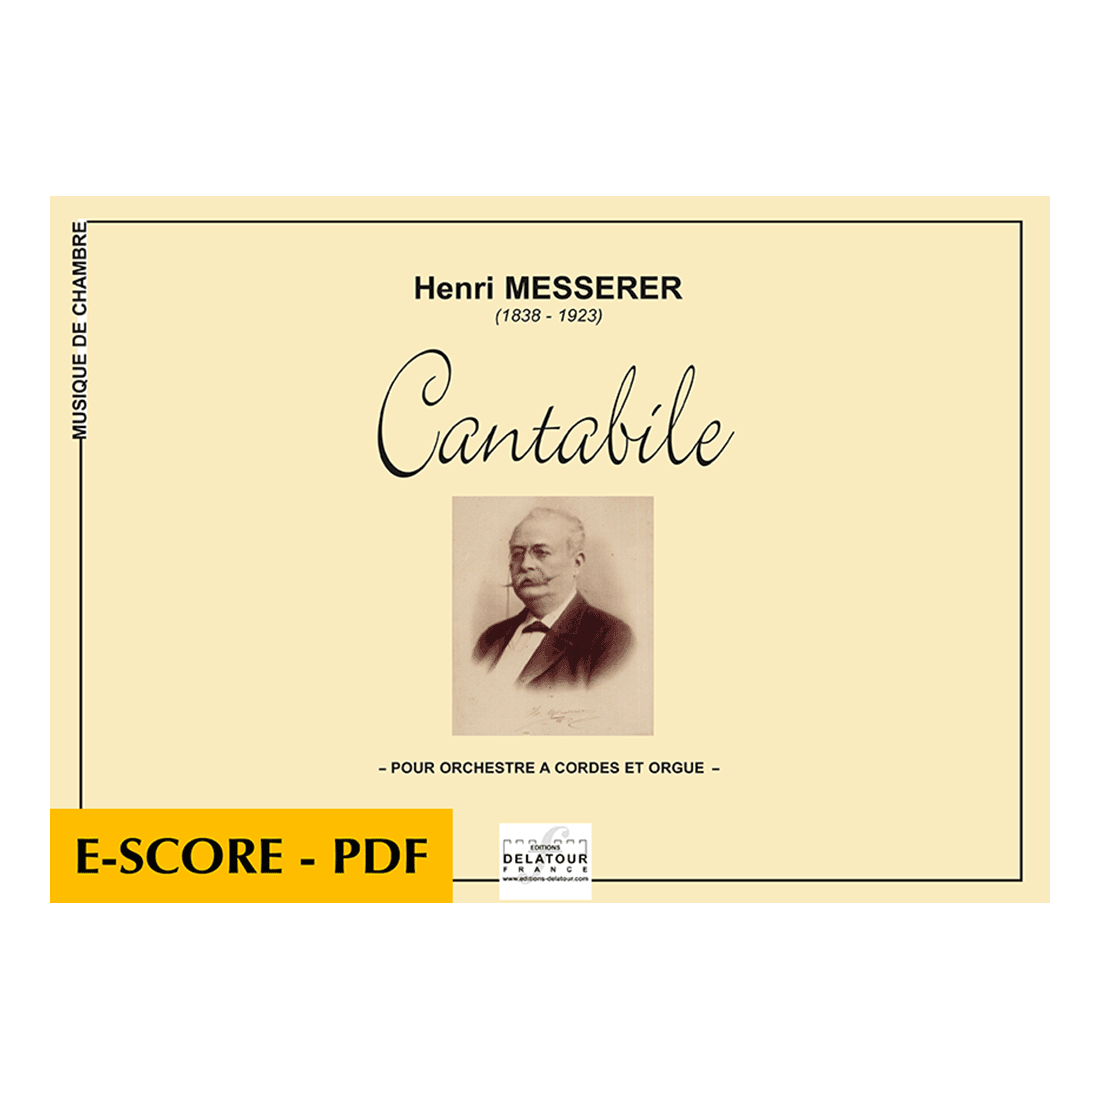 Cantabile for string orchestra and organ - E-score PDF